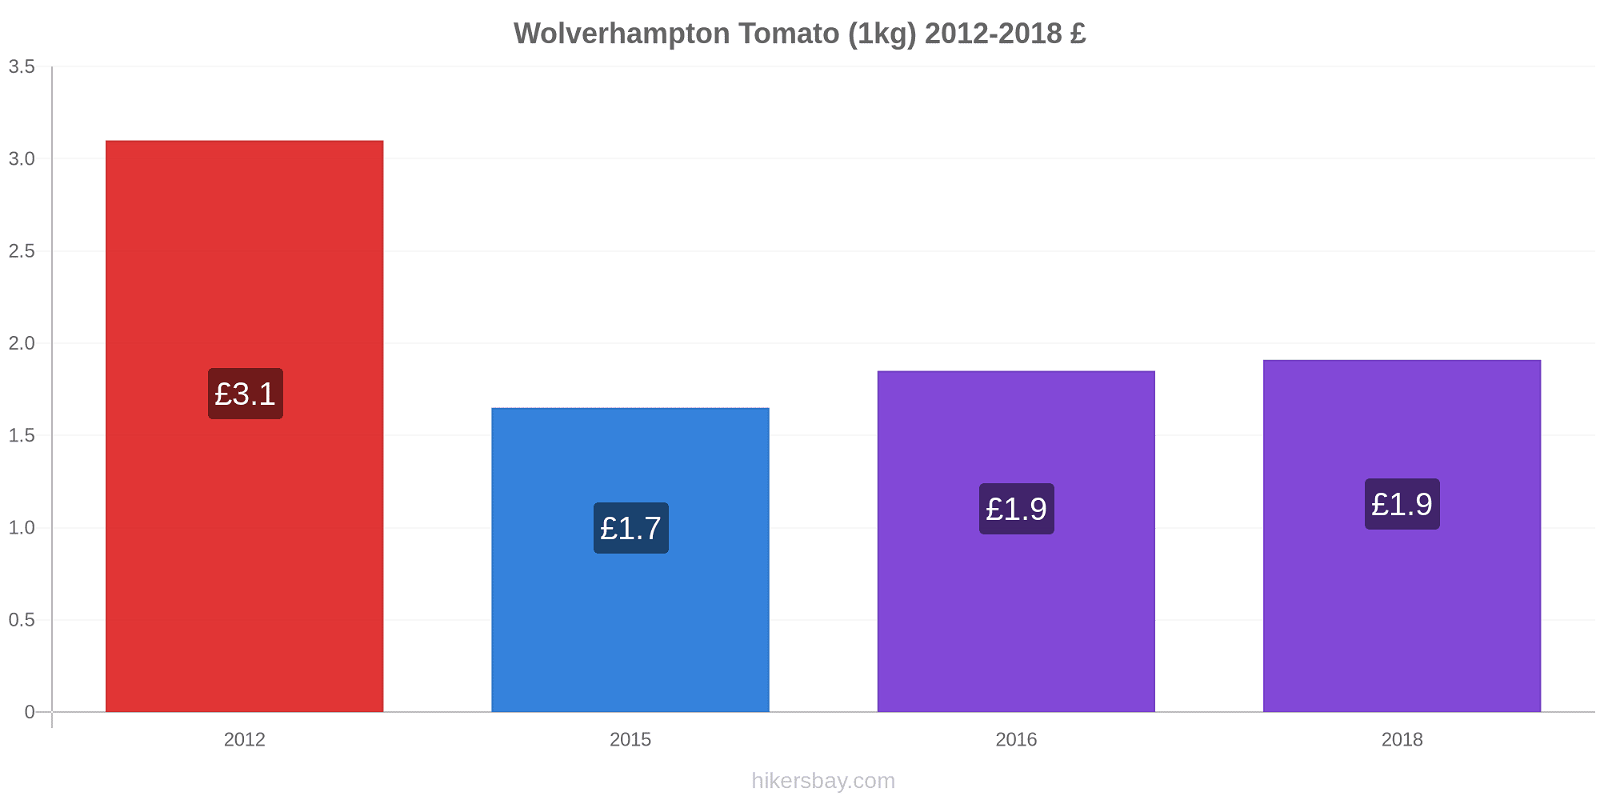 Wolverhampton price changes Tomato (1kg) hikersbay.com